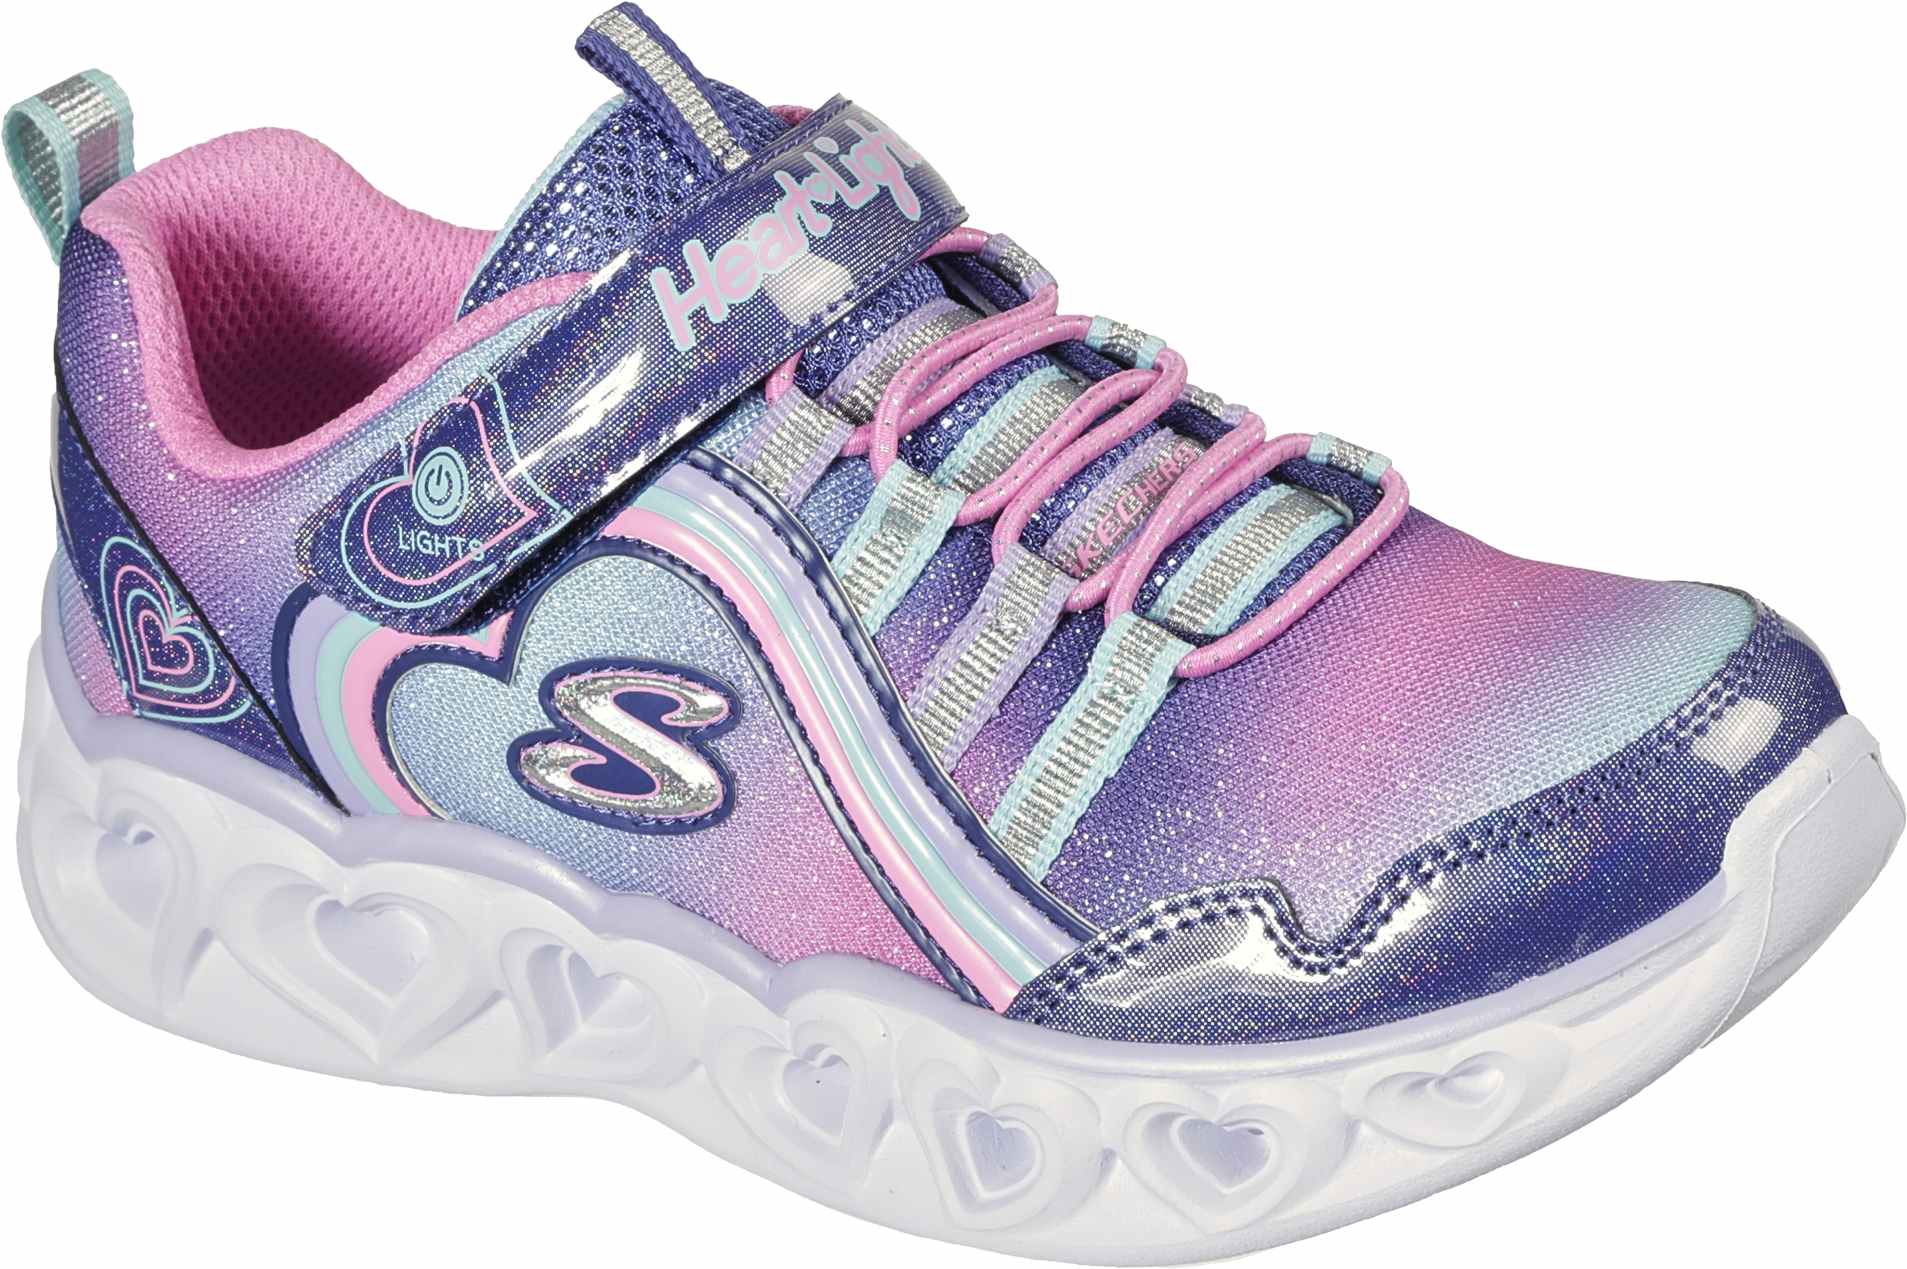 Girl’s flashing sneakers